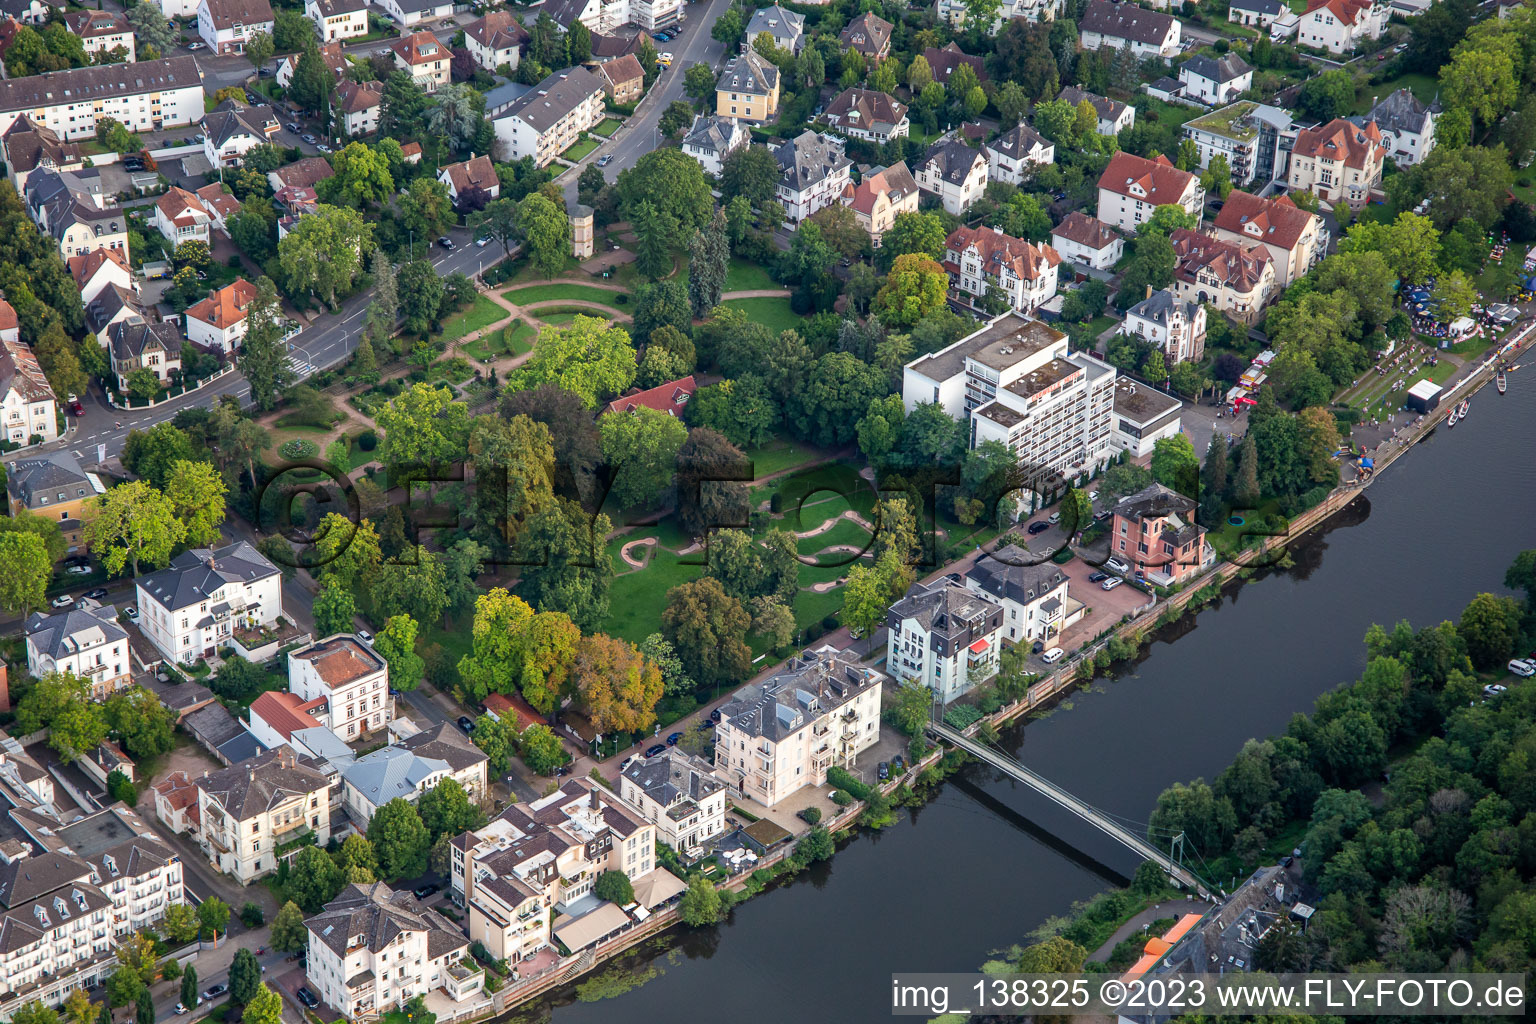 Orange Park in Bad Kreuznach in the state Rhineland-Palatinate, Germany